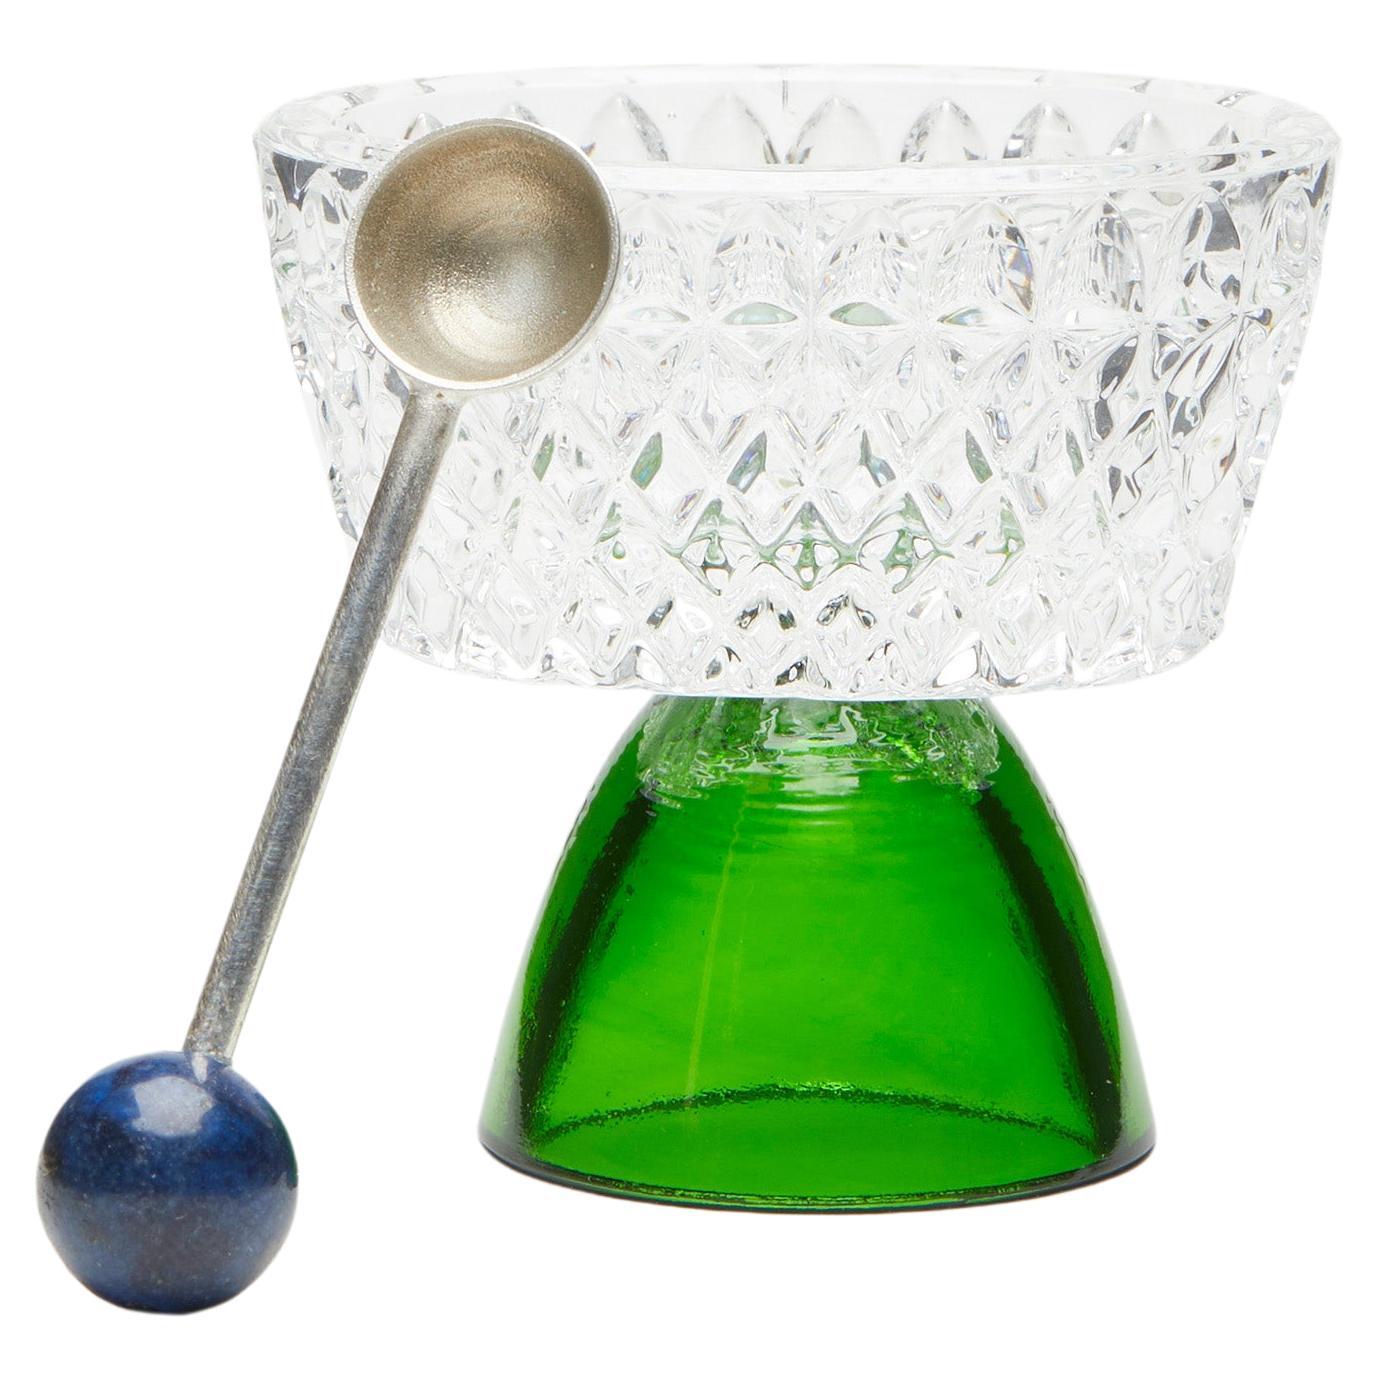  Contemporary Crystal Clear Green Salt Cellar Spoon Handcrafted Natalia Criado For Sale